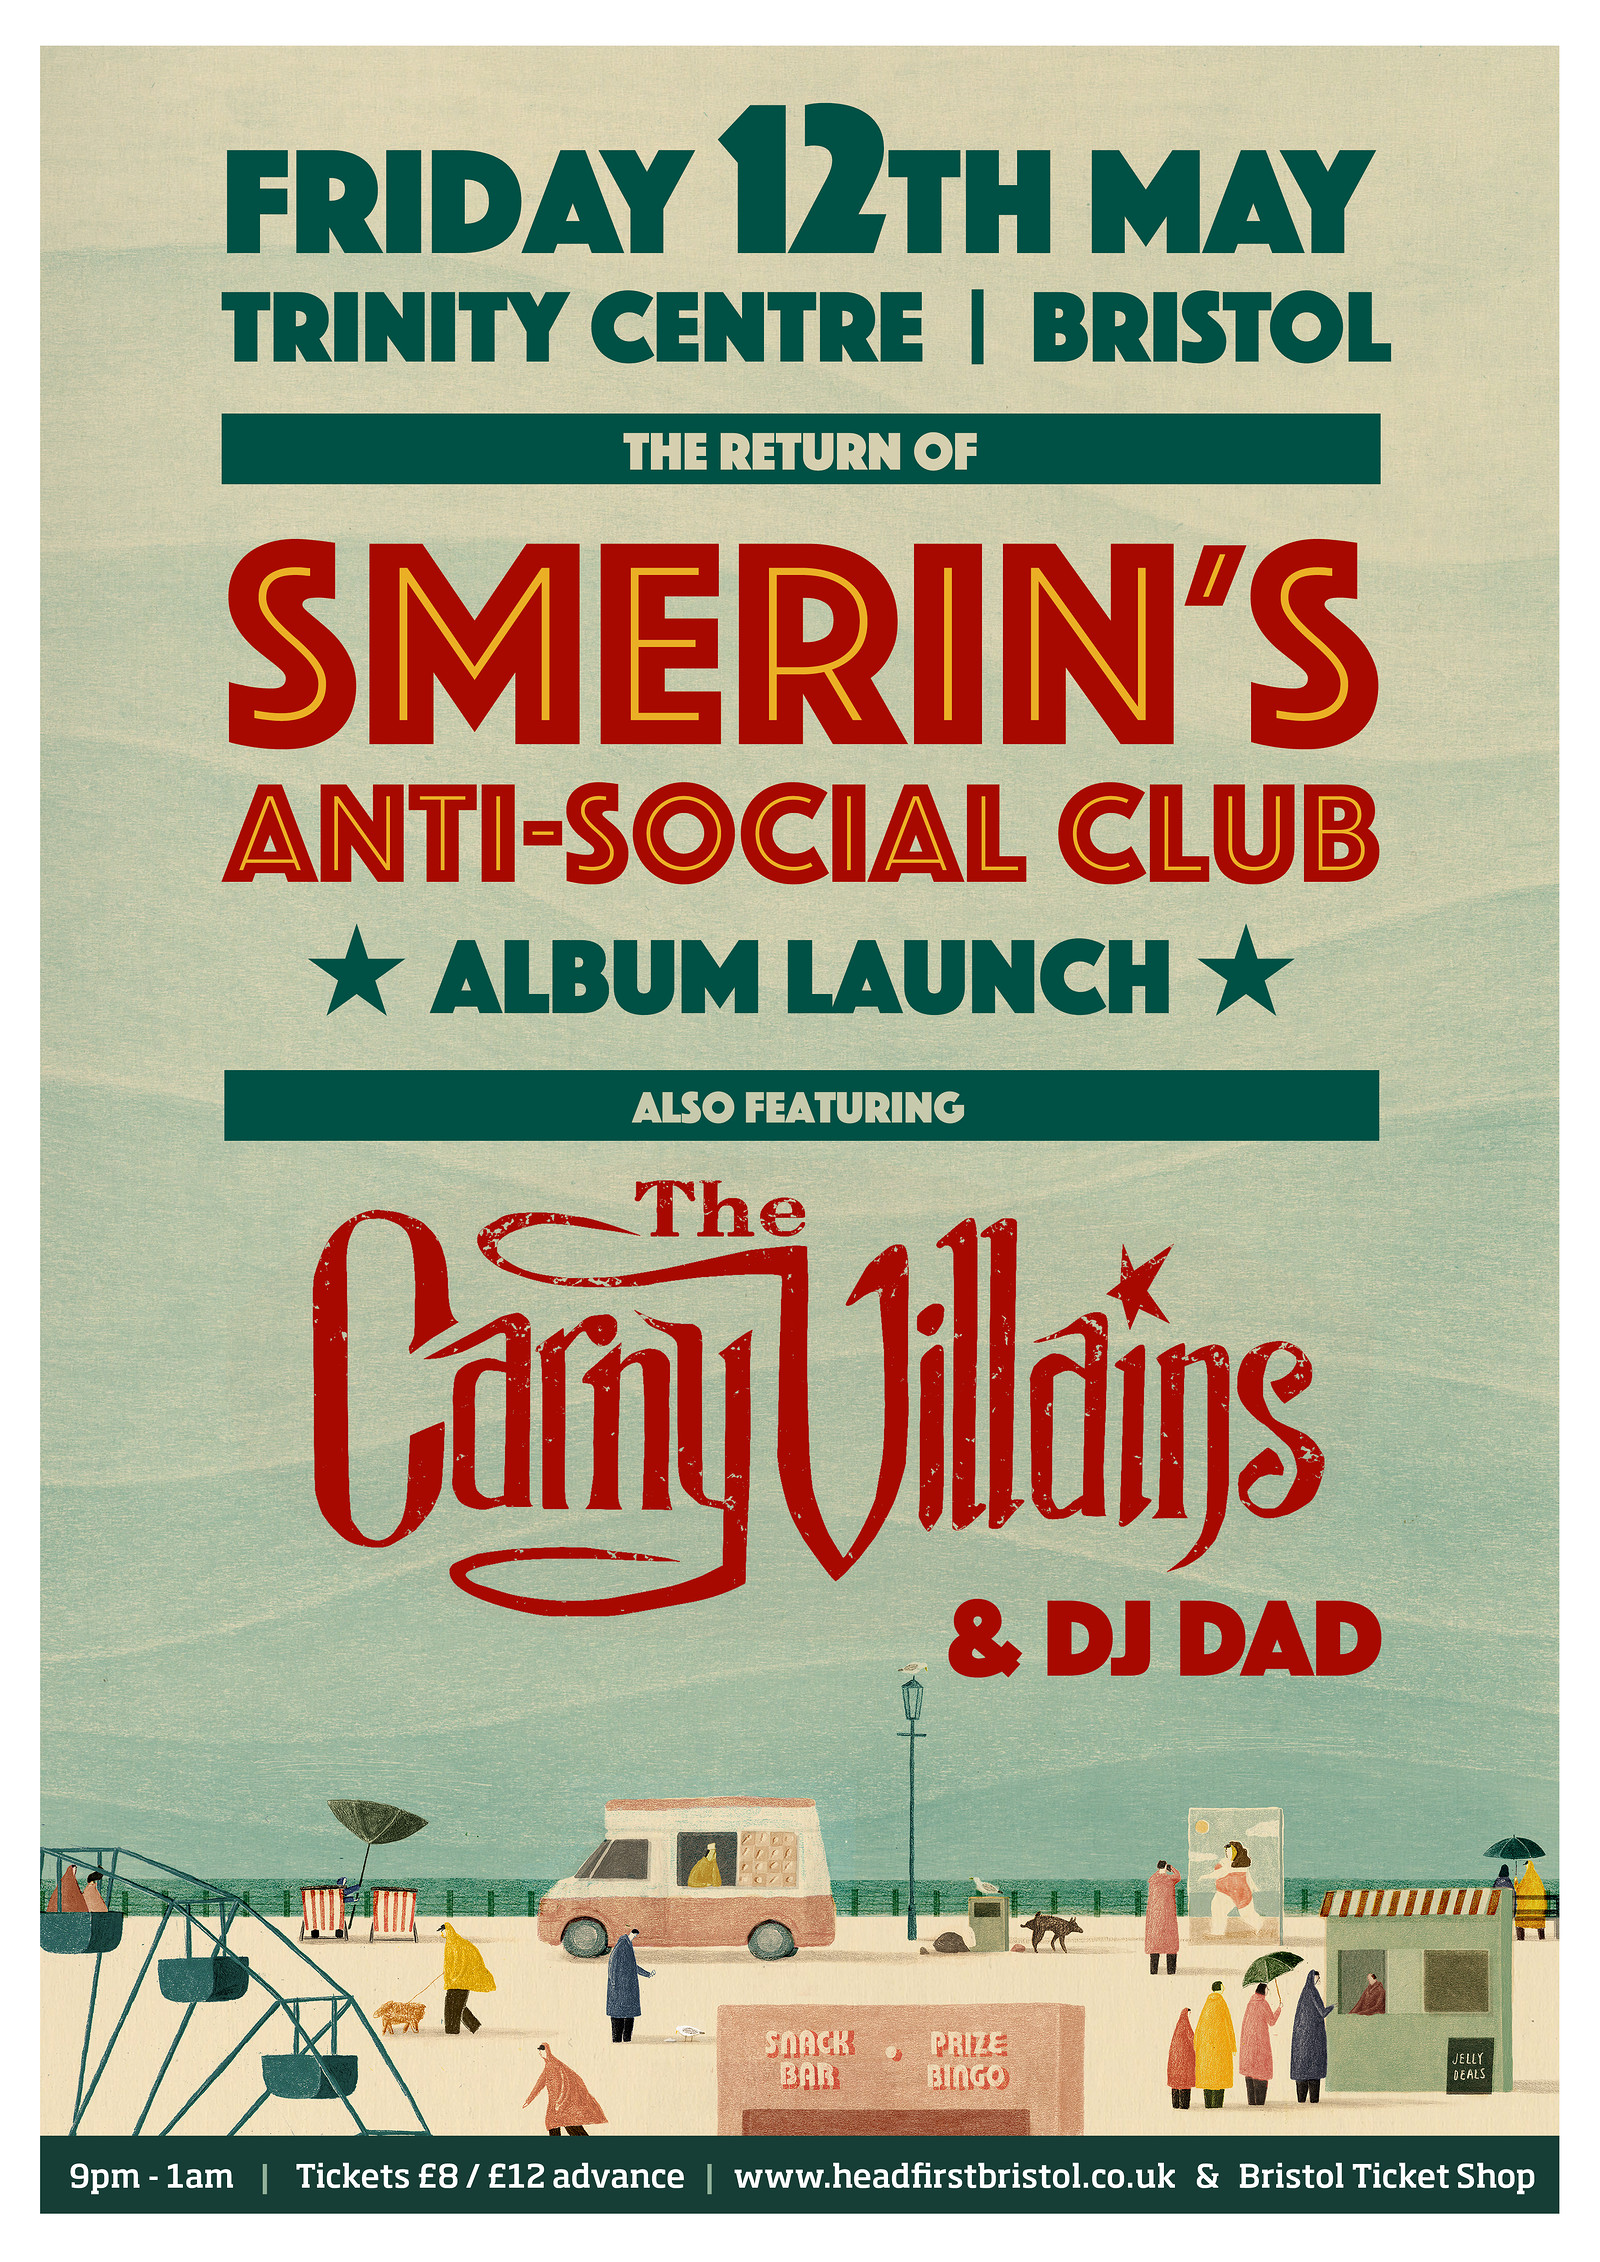 Smerins Anti-Social Club & The Carny Villains at The Trinity Centre